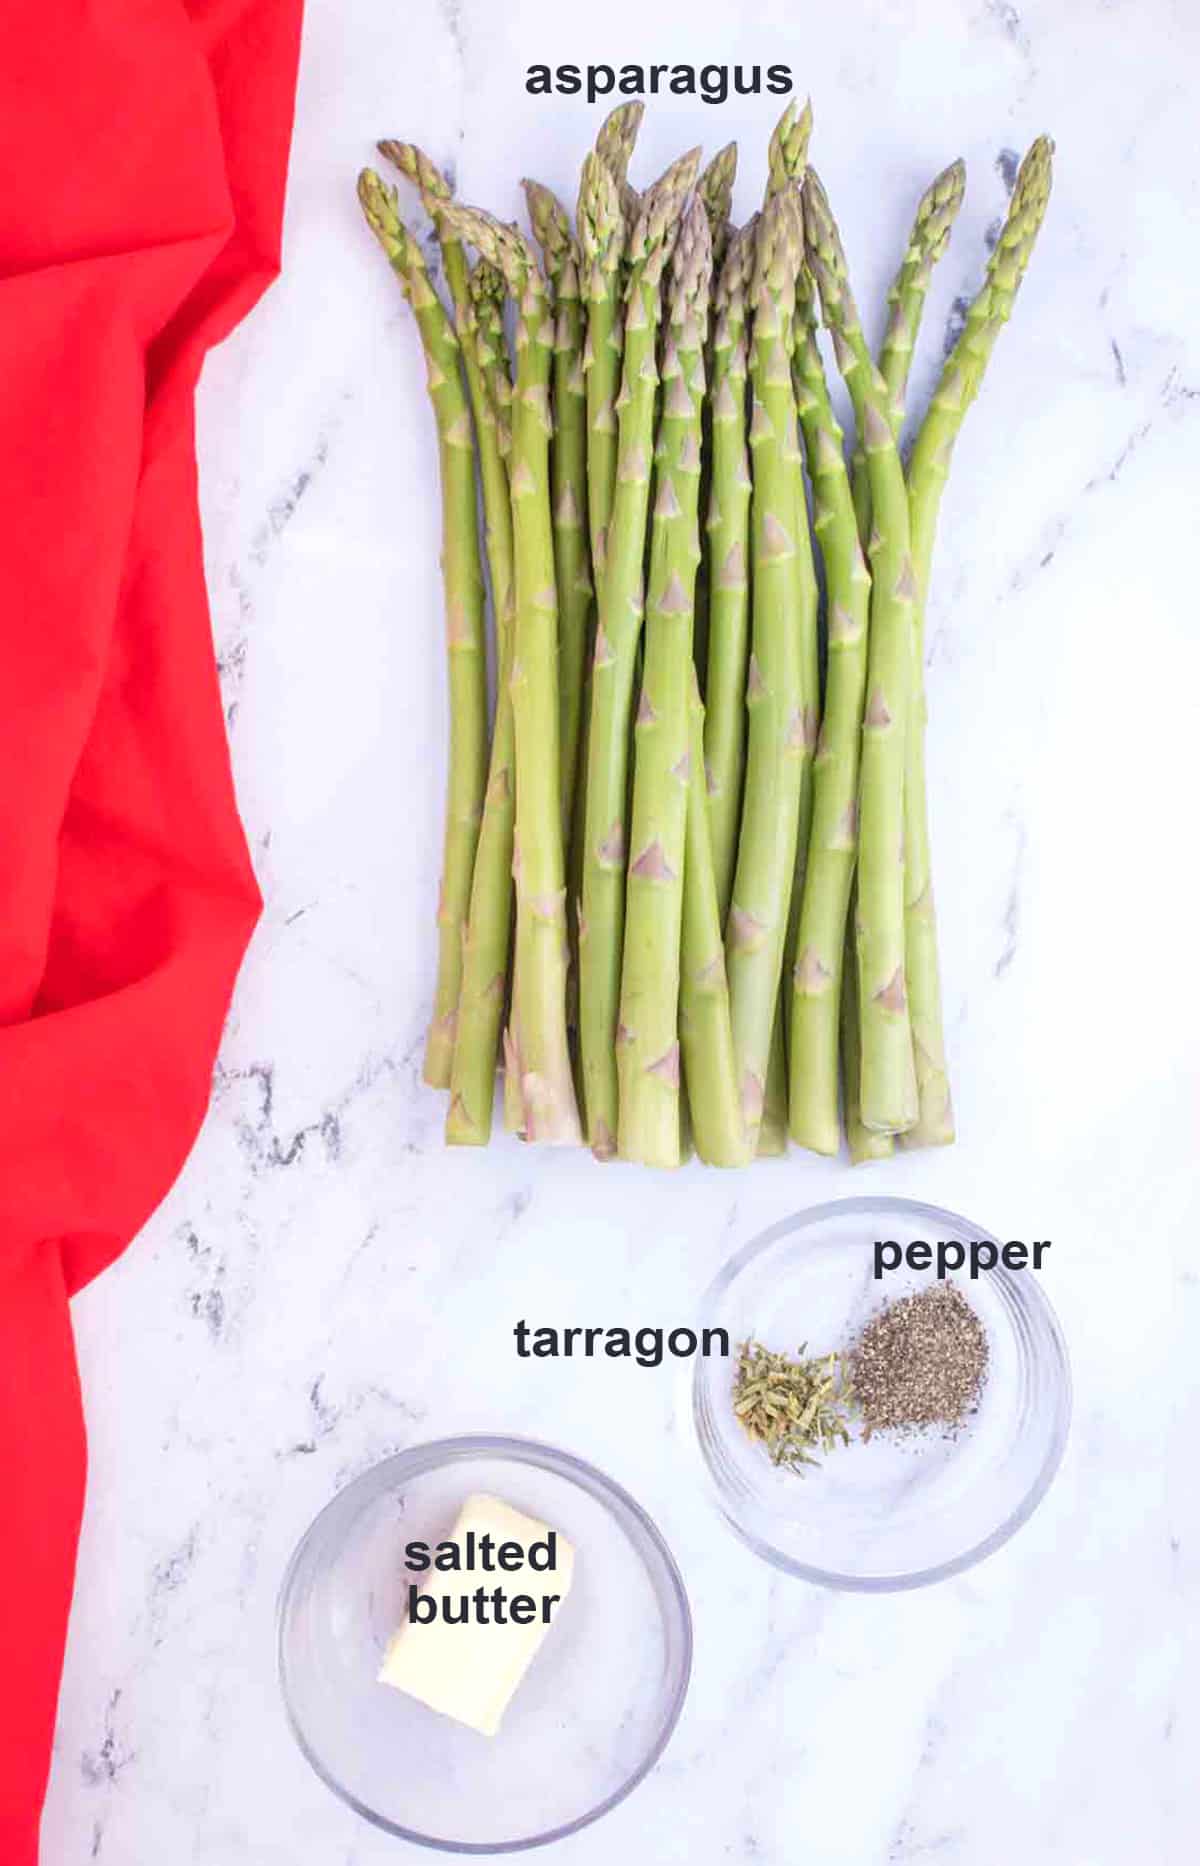 raw asparagus, seasonings, butter